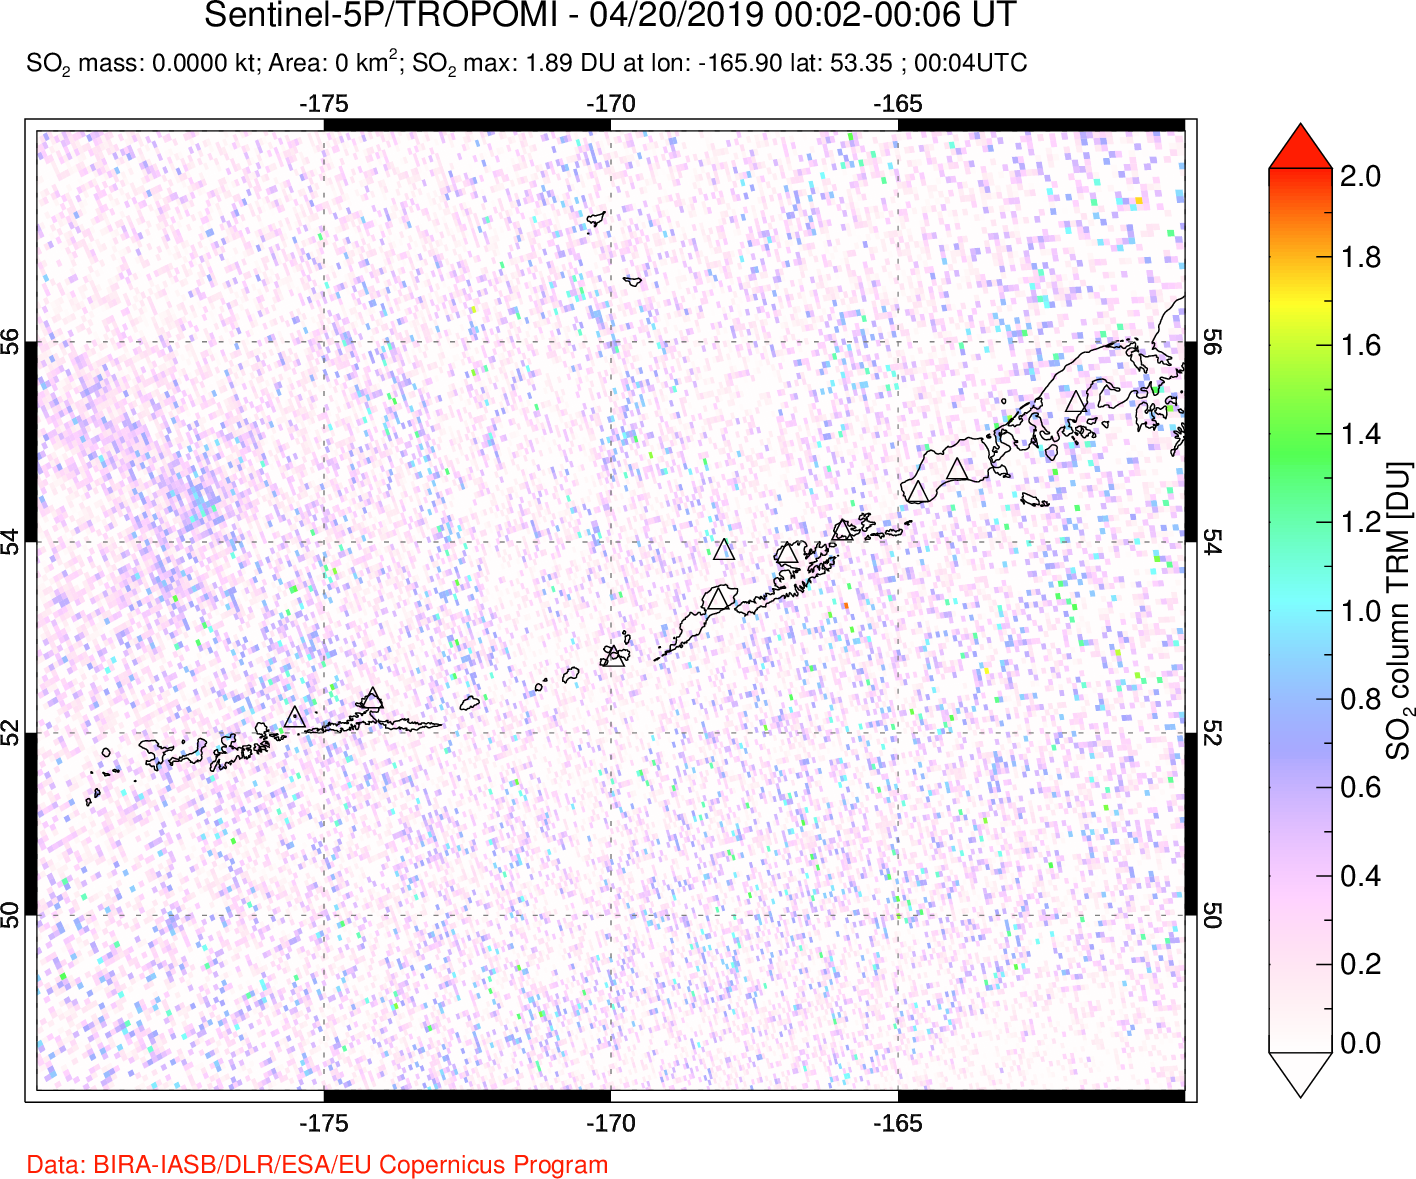 A sulfur dioxide image over Aleutian Islands, Alaska, USA on Apr 20, 2019.